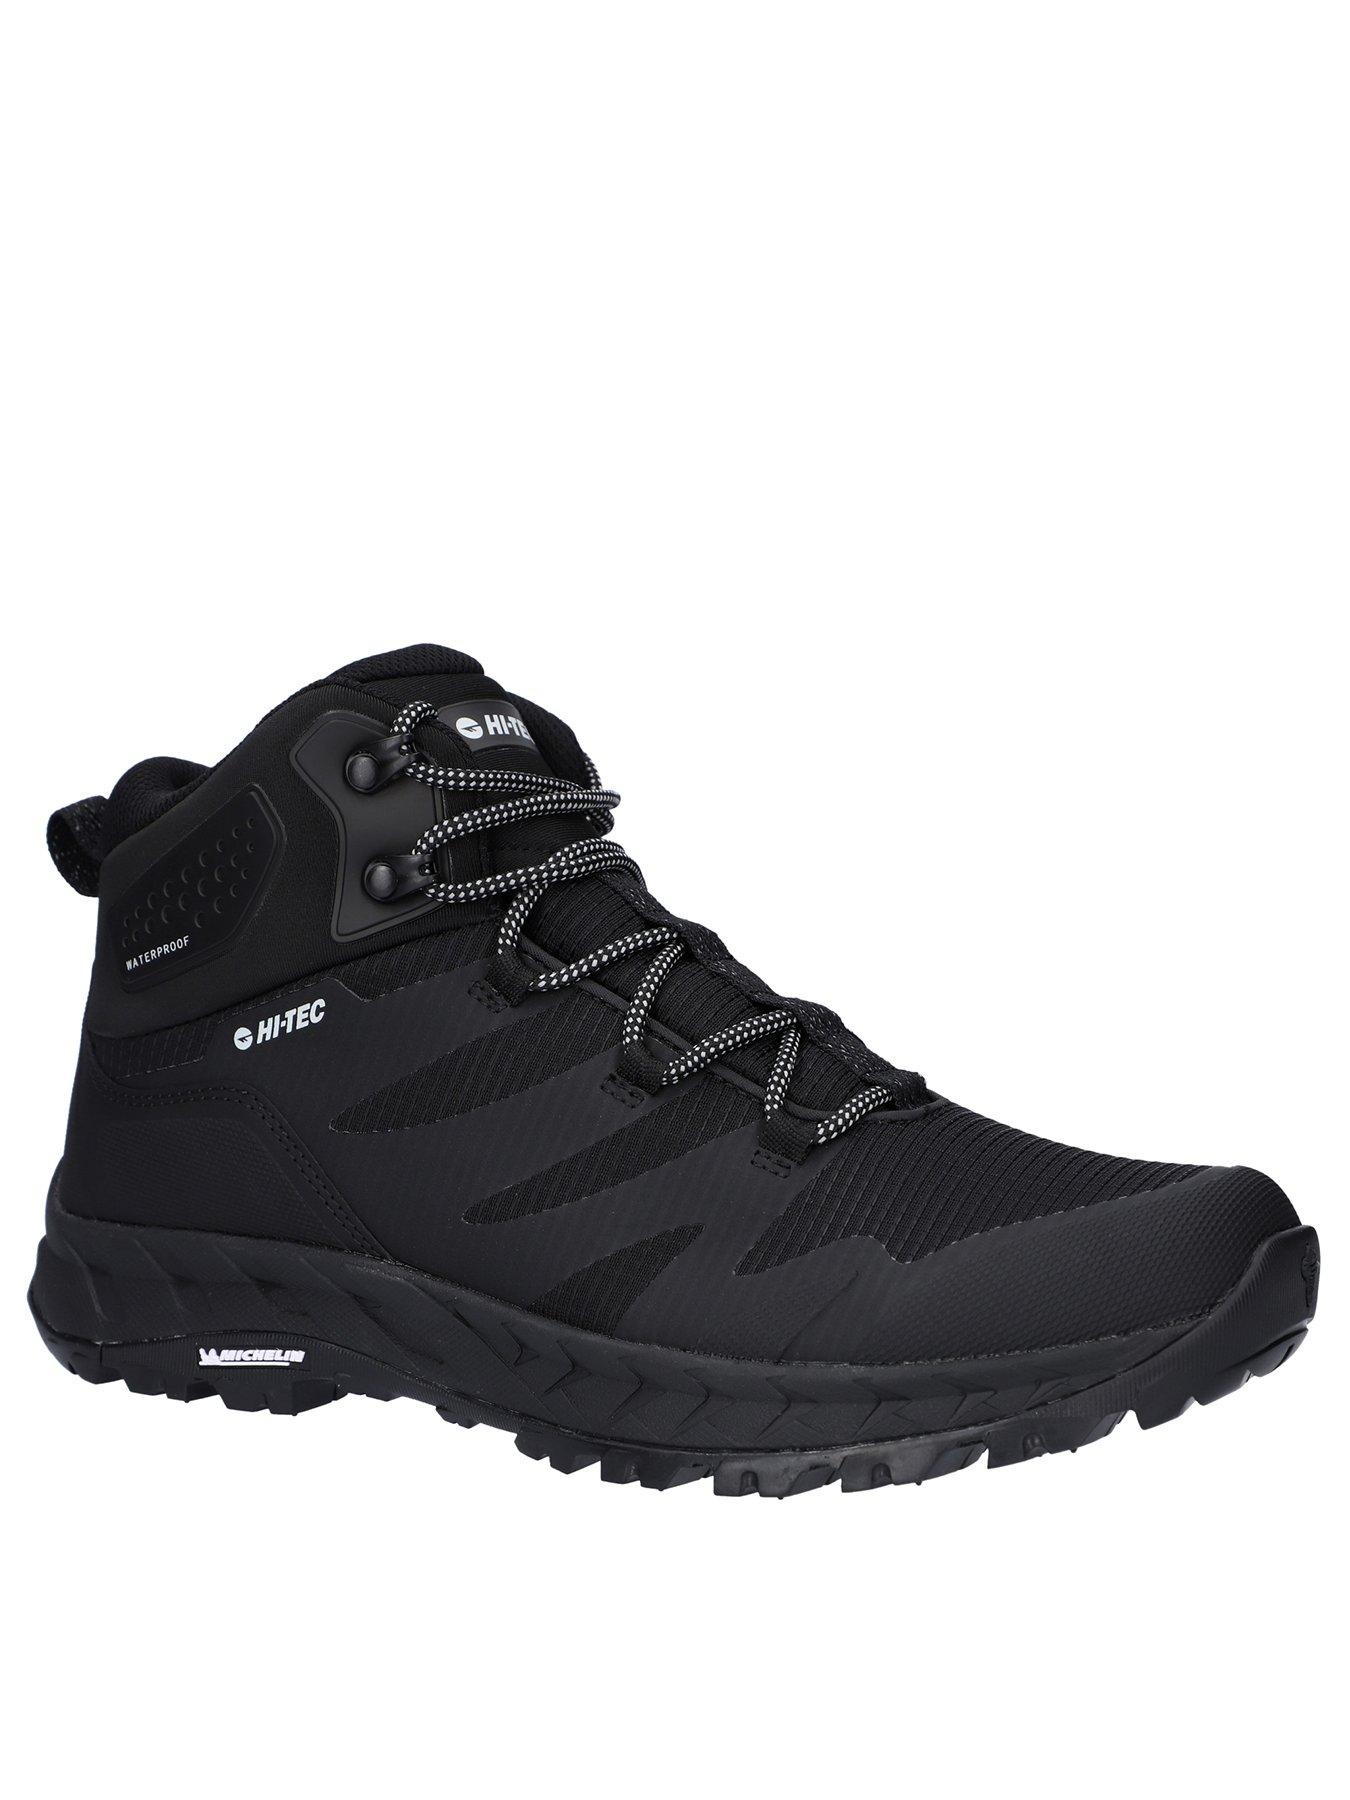 Hi-Tec Nytro Mid Waterproof Boots - Black | very.co.uk